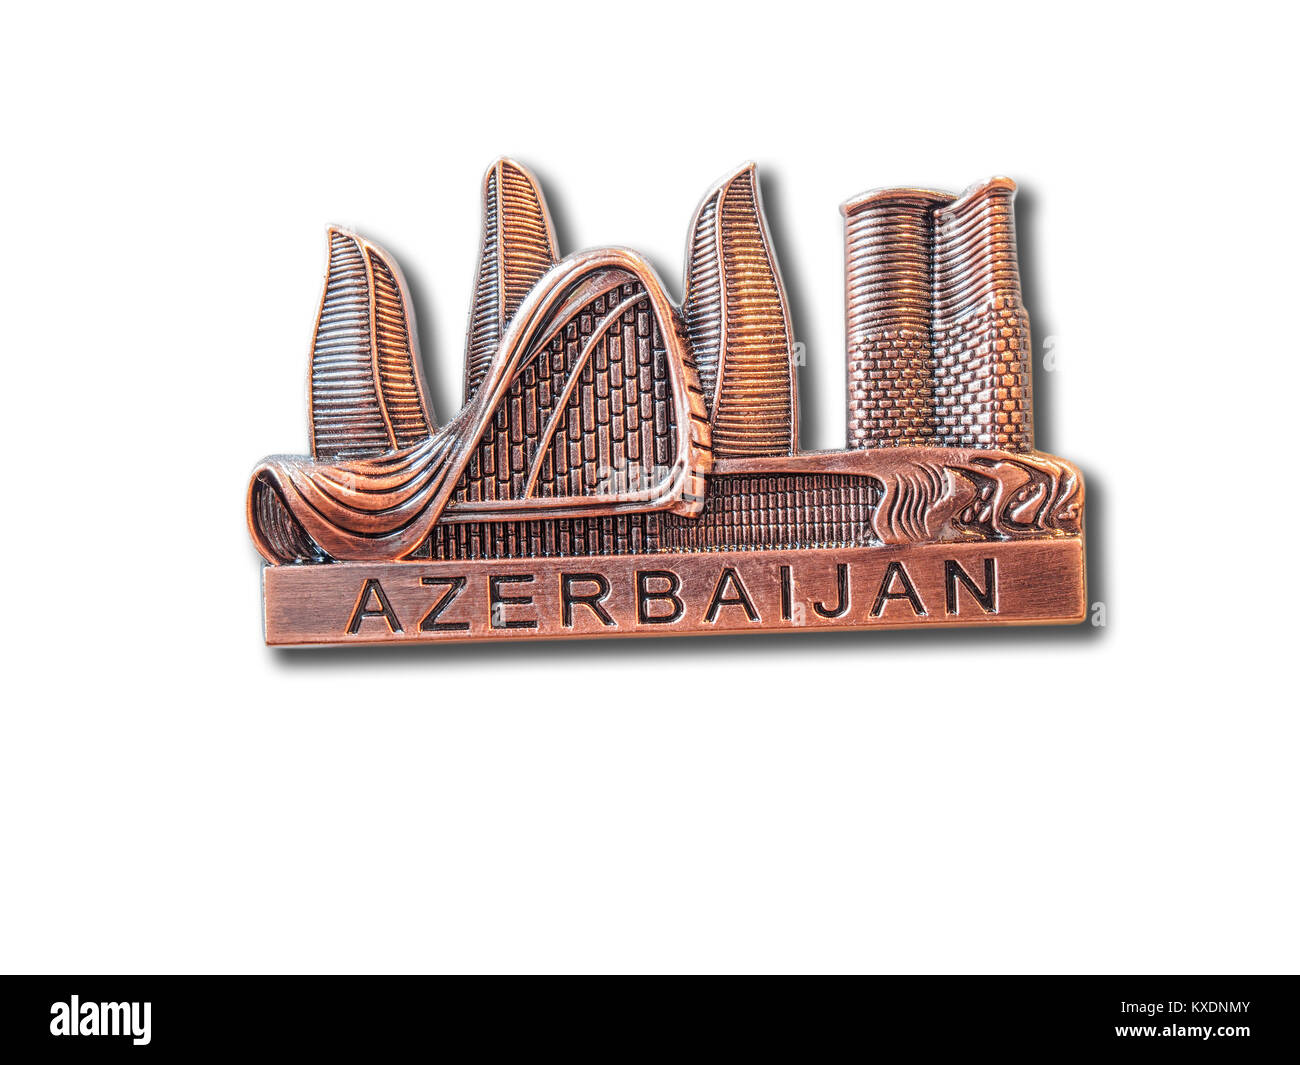 Azerbaijan Fridge Magnet 01 Baku 